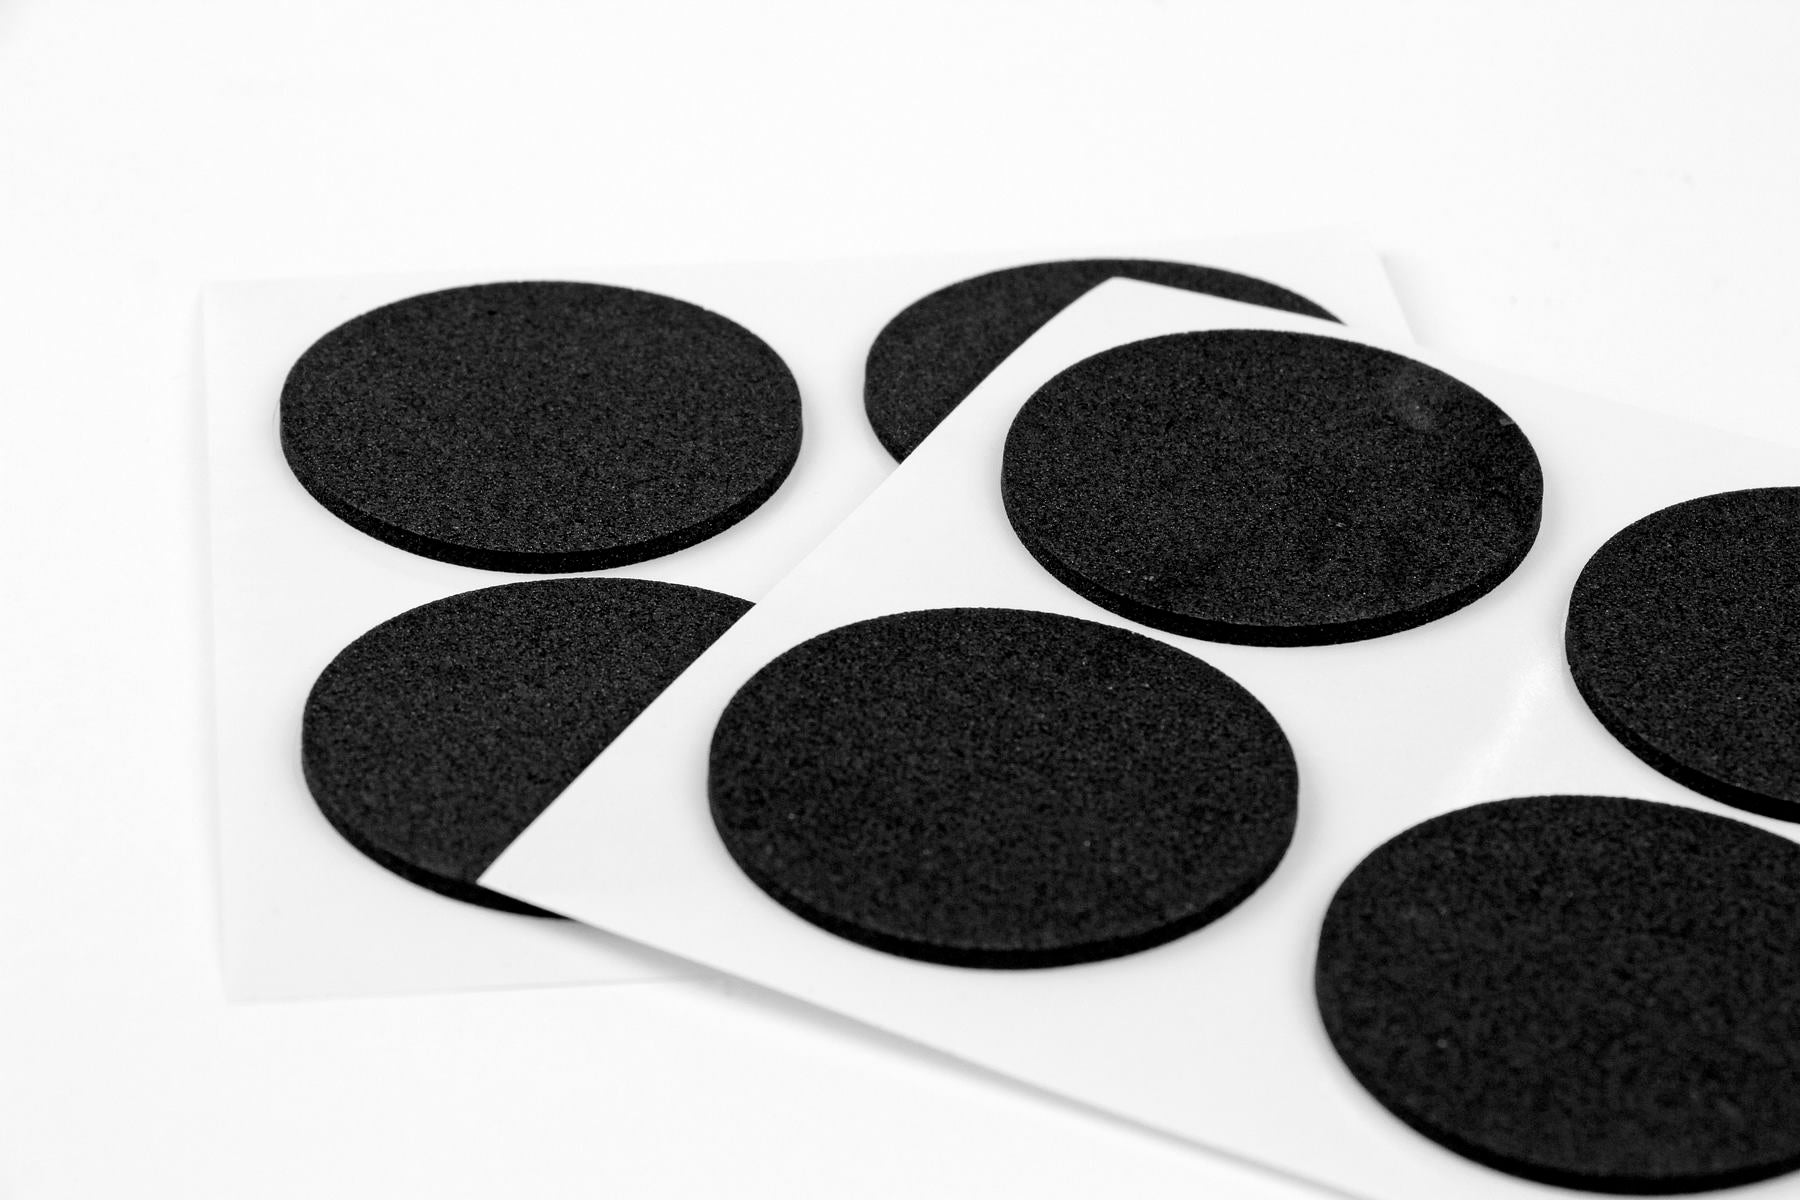 Furndiy Self-Adhesive Non-Slip Eva Pads for Chair & Seat Furniture Feet Pads Hardwood Floor Protection - Noise Stopper (Black)